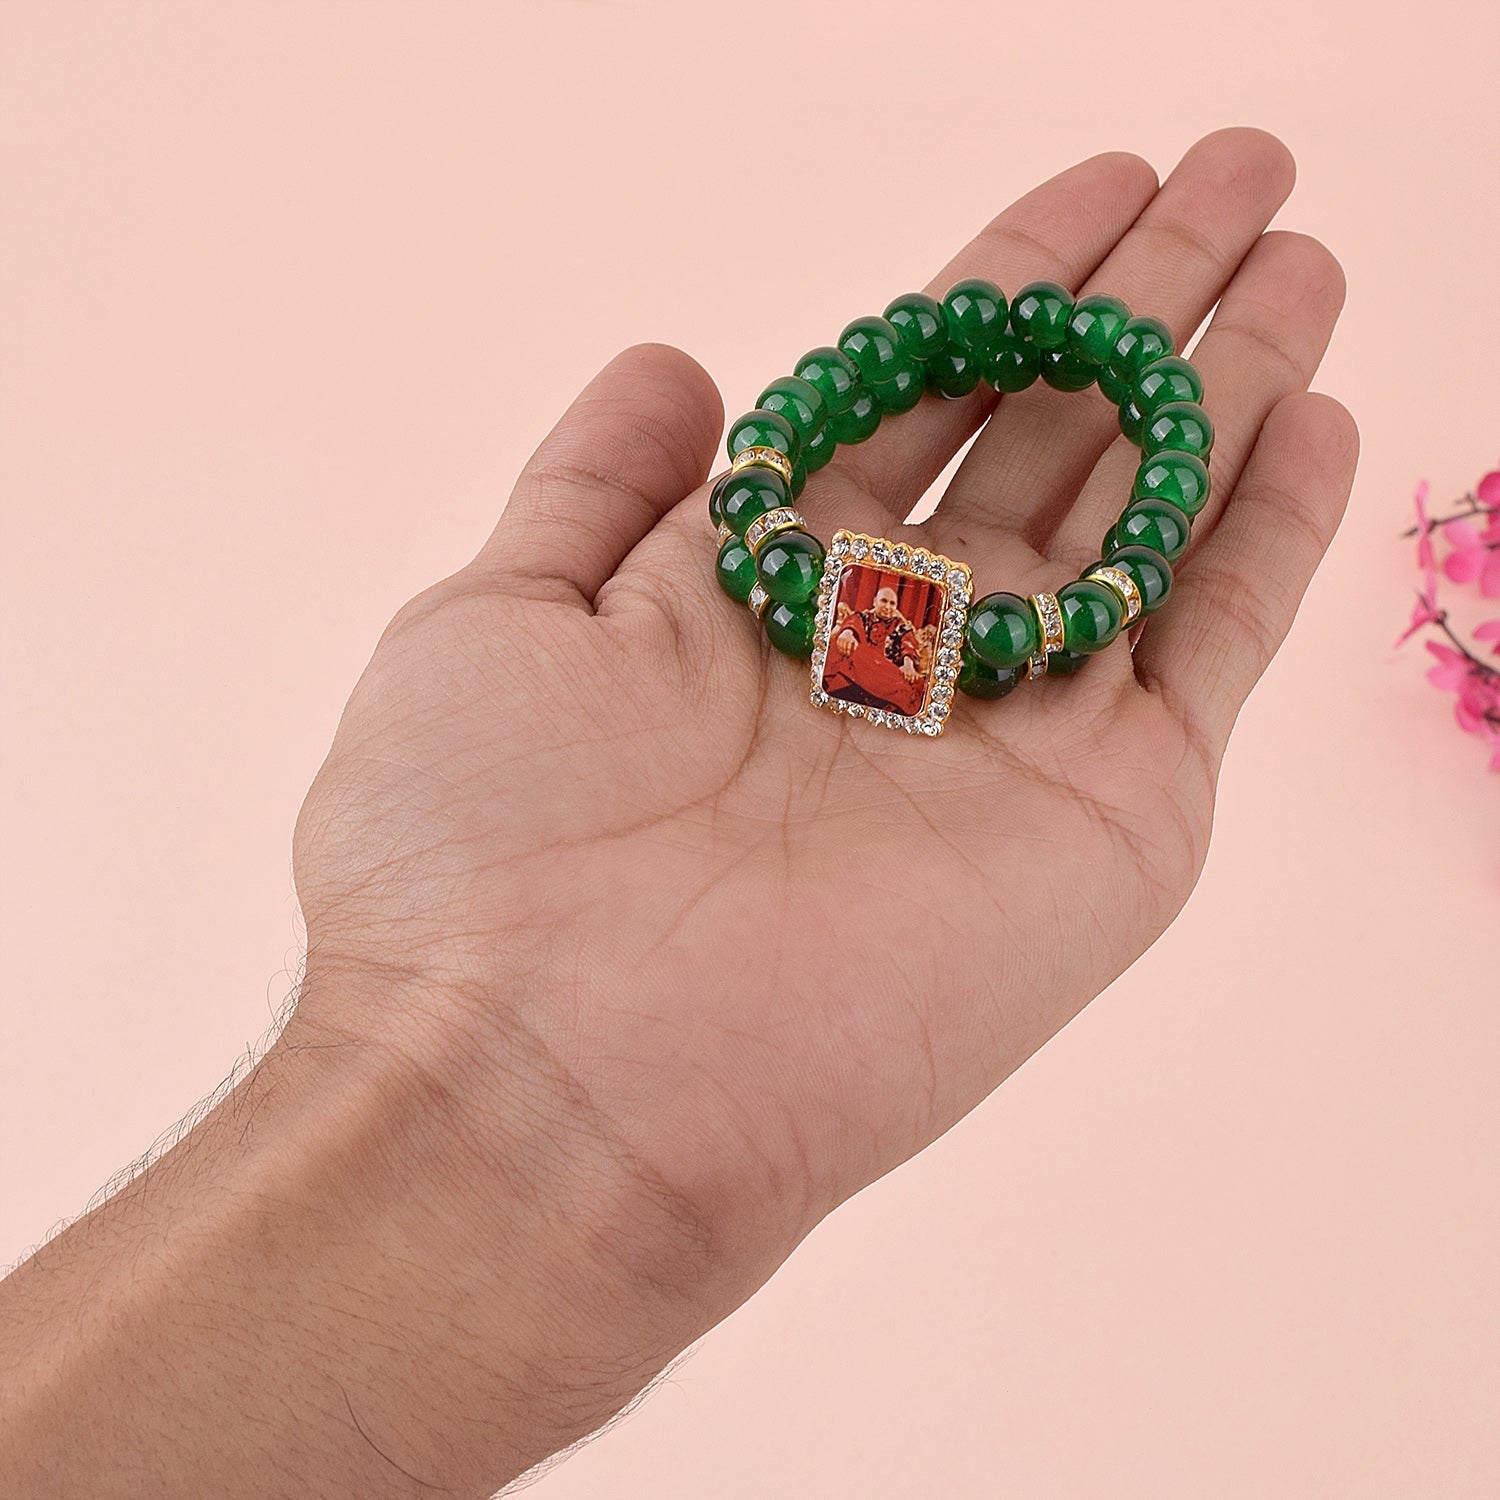 Bottle Green Pearl Bracelet with Jai Guruji Swaroop